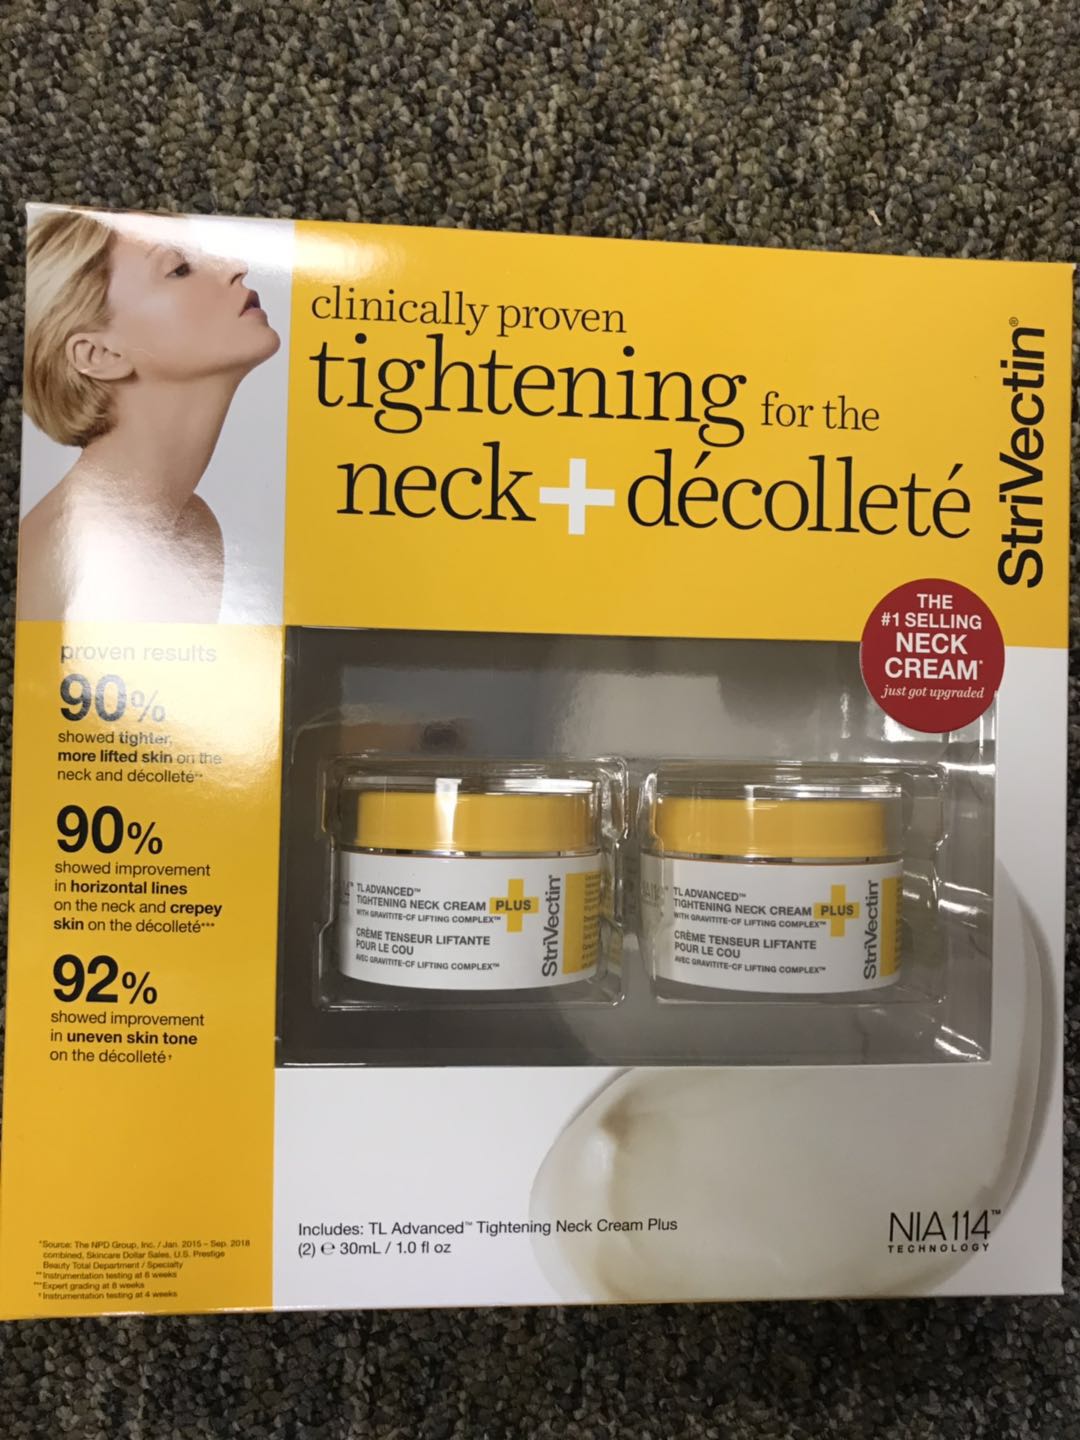 颈霜 Strivectin  tightening neck + cecollete